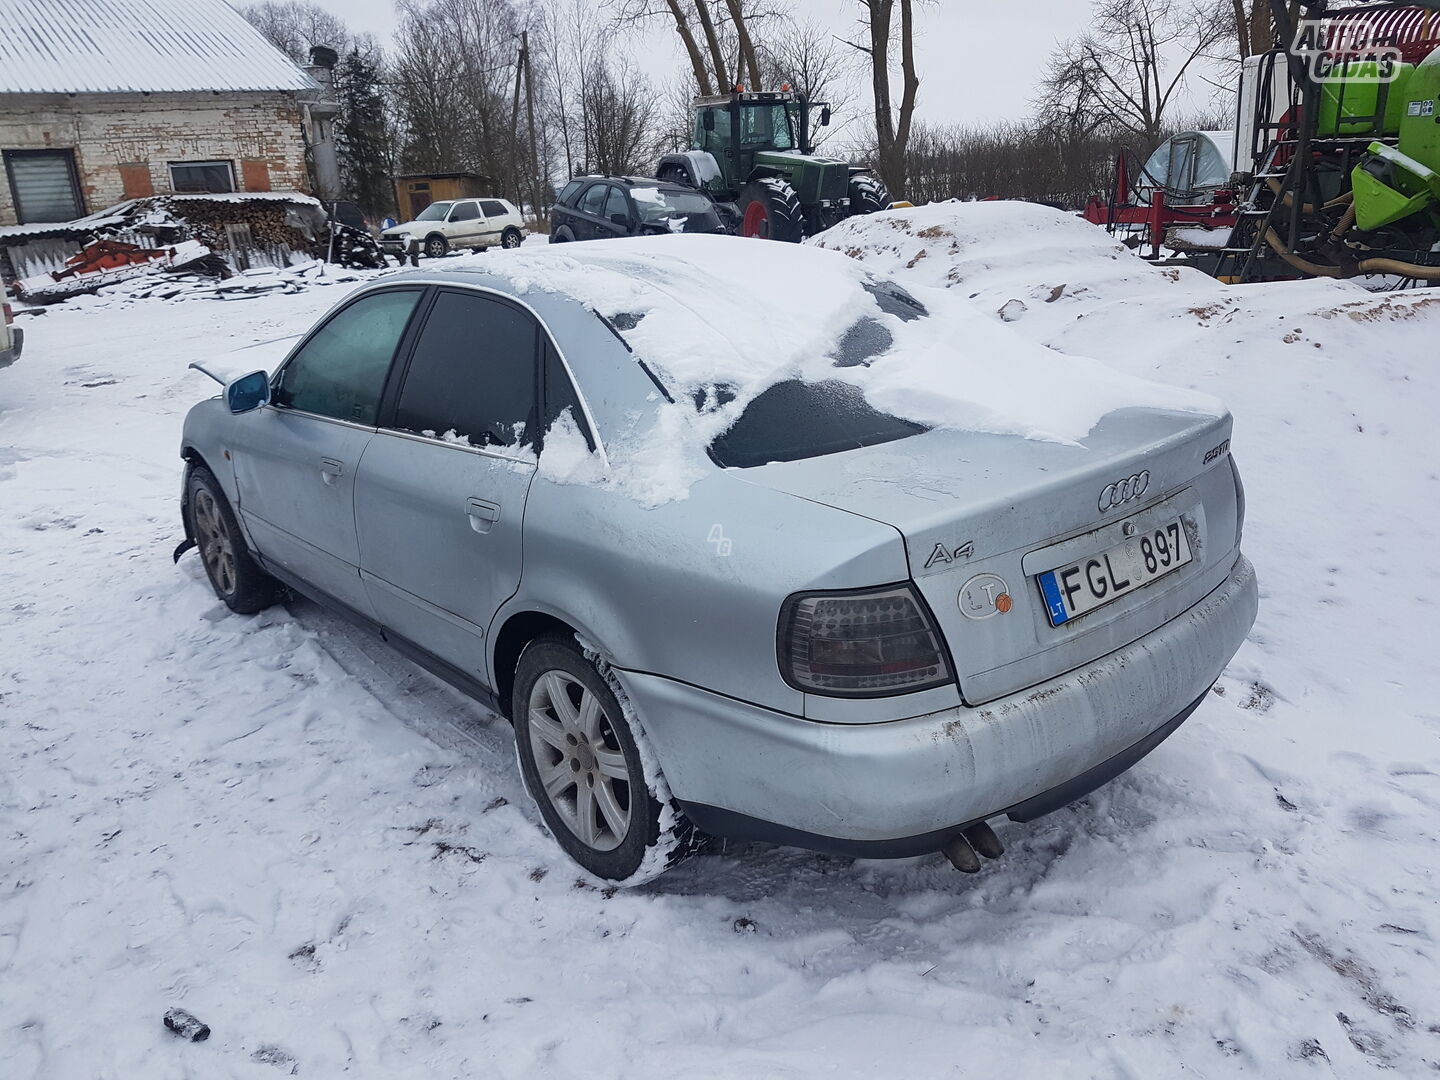 Audi A4 B5 1998 m dalys